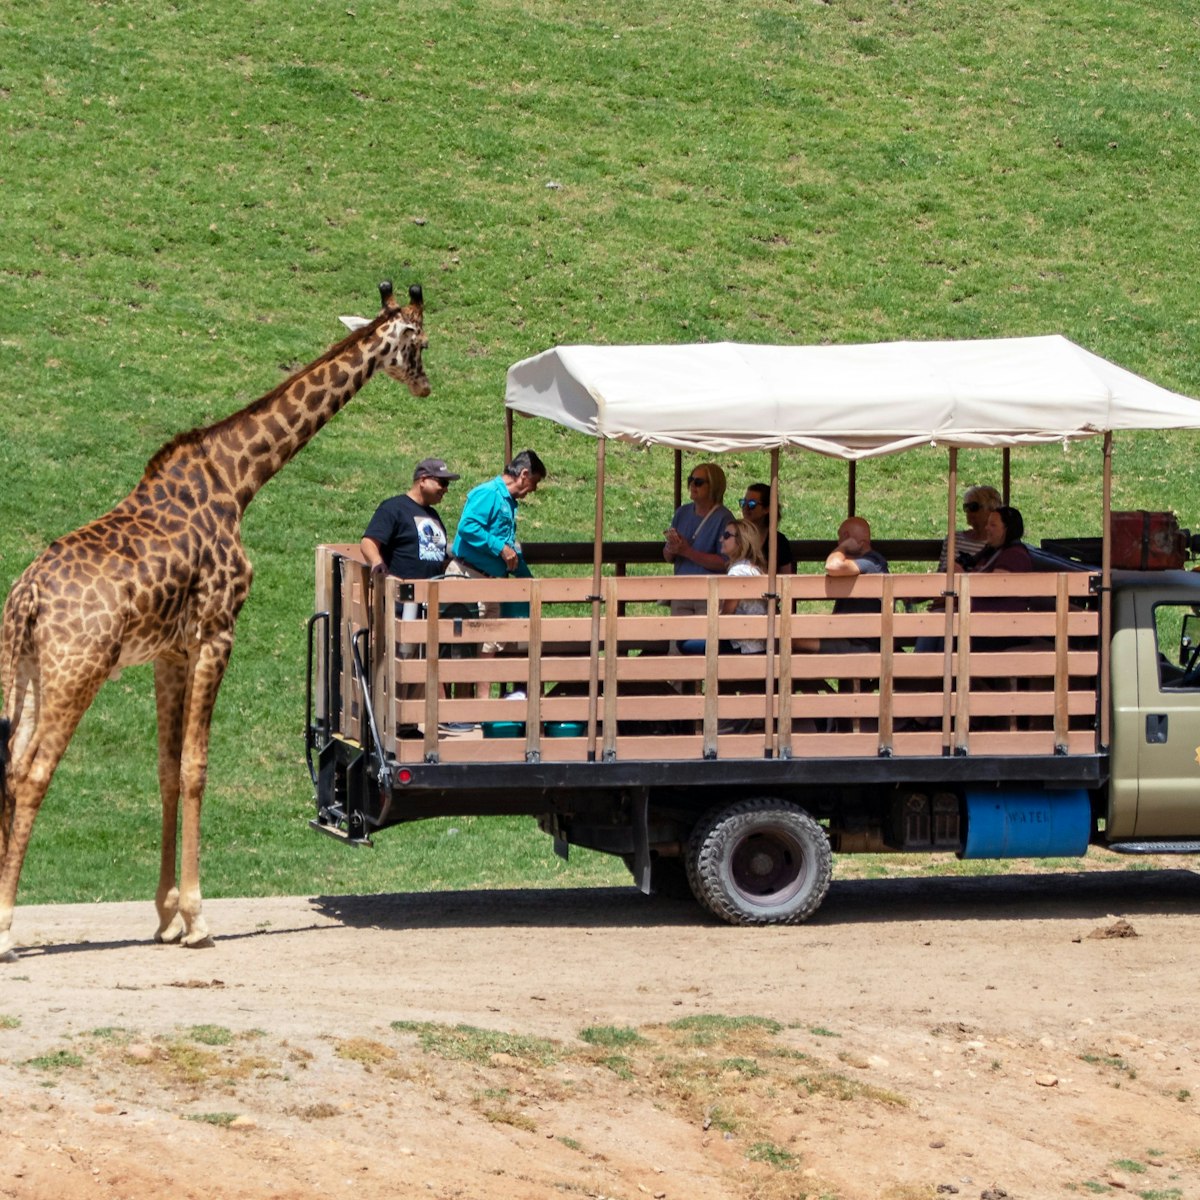 Escondido, CA / USA - 05/05/2019: Giraffes Next to a Safari Truck at the San Diego Zoo Safari Park; Shutterstock ID 1391111201; your: Bridget Brown; gl: 65050; netsuite: Online Editorial; full: POI Image Update